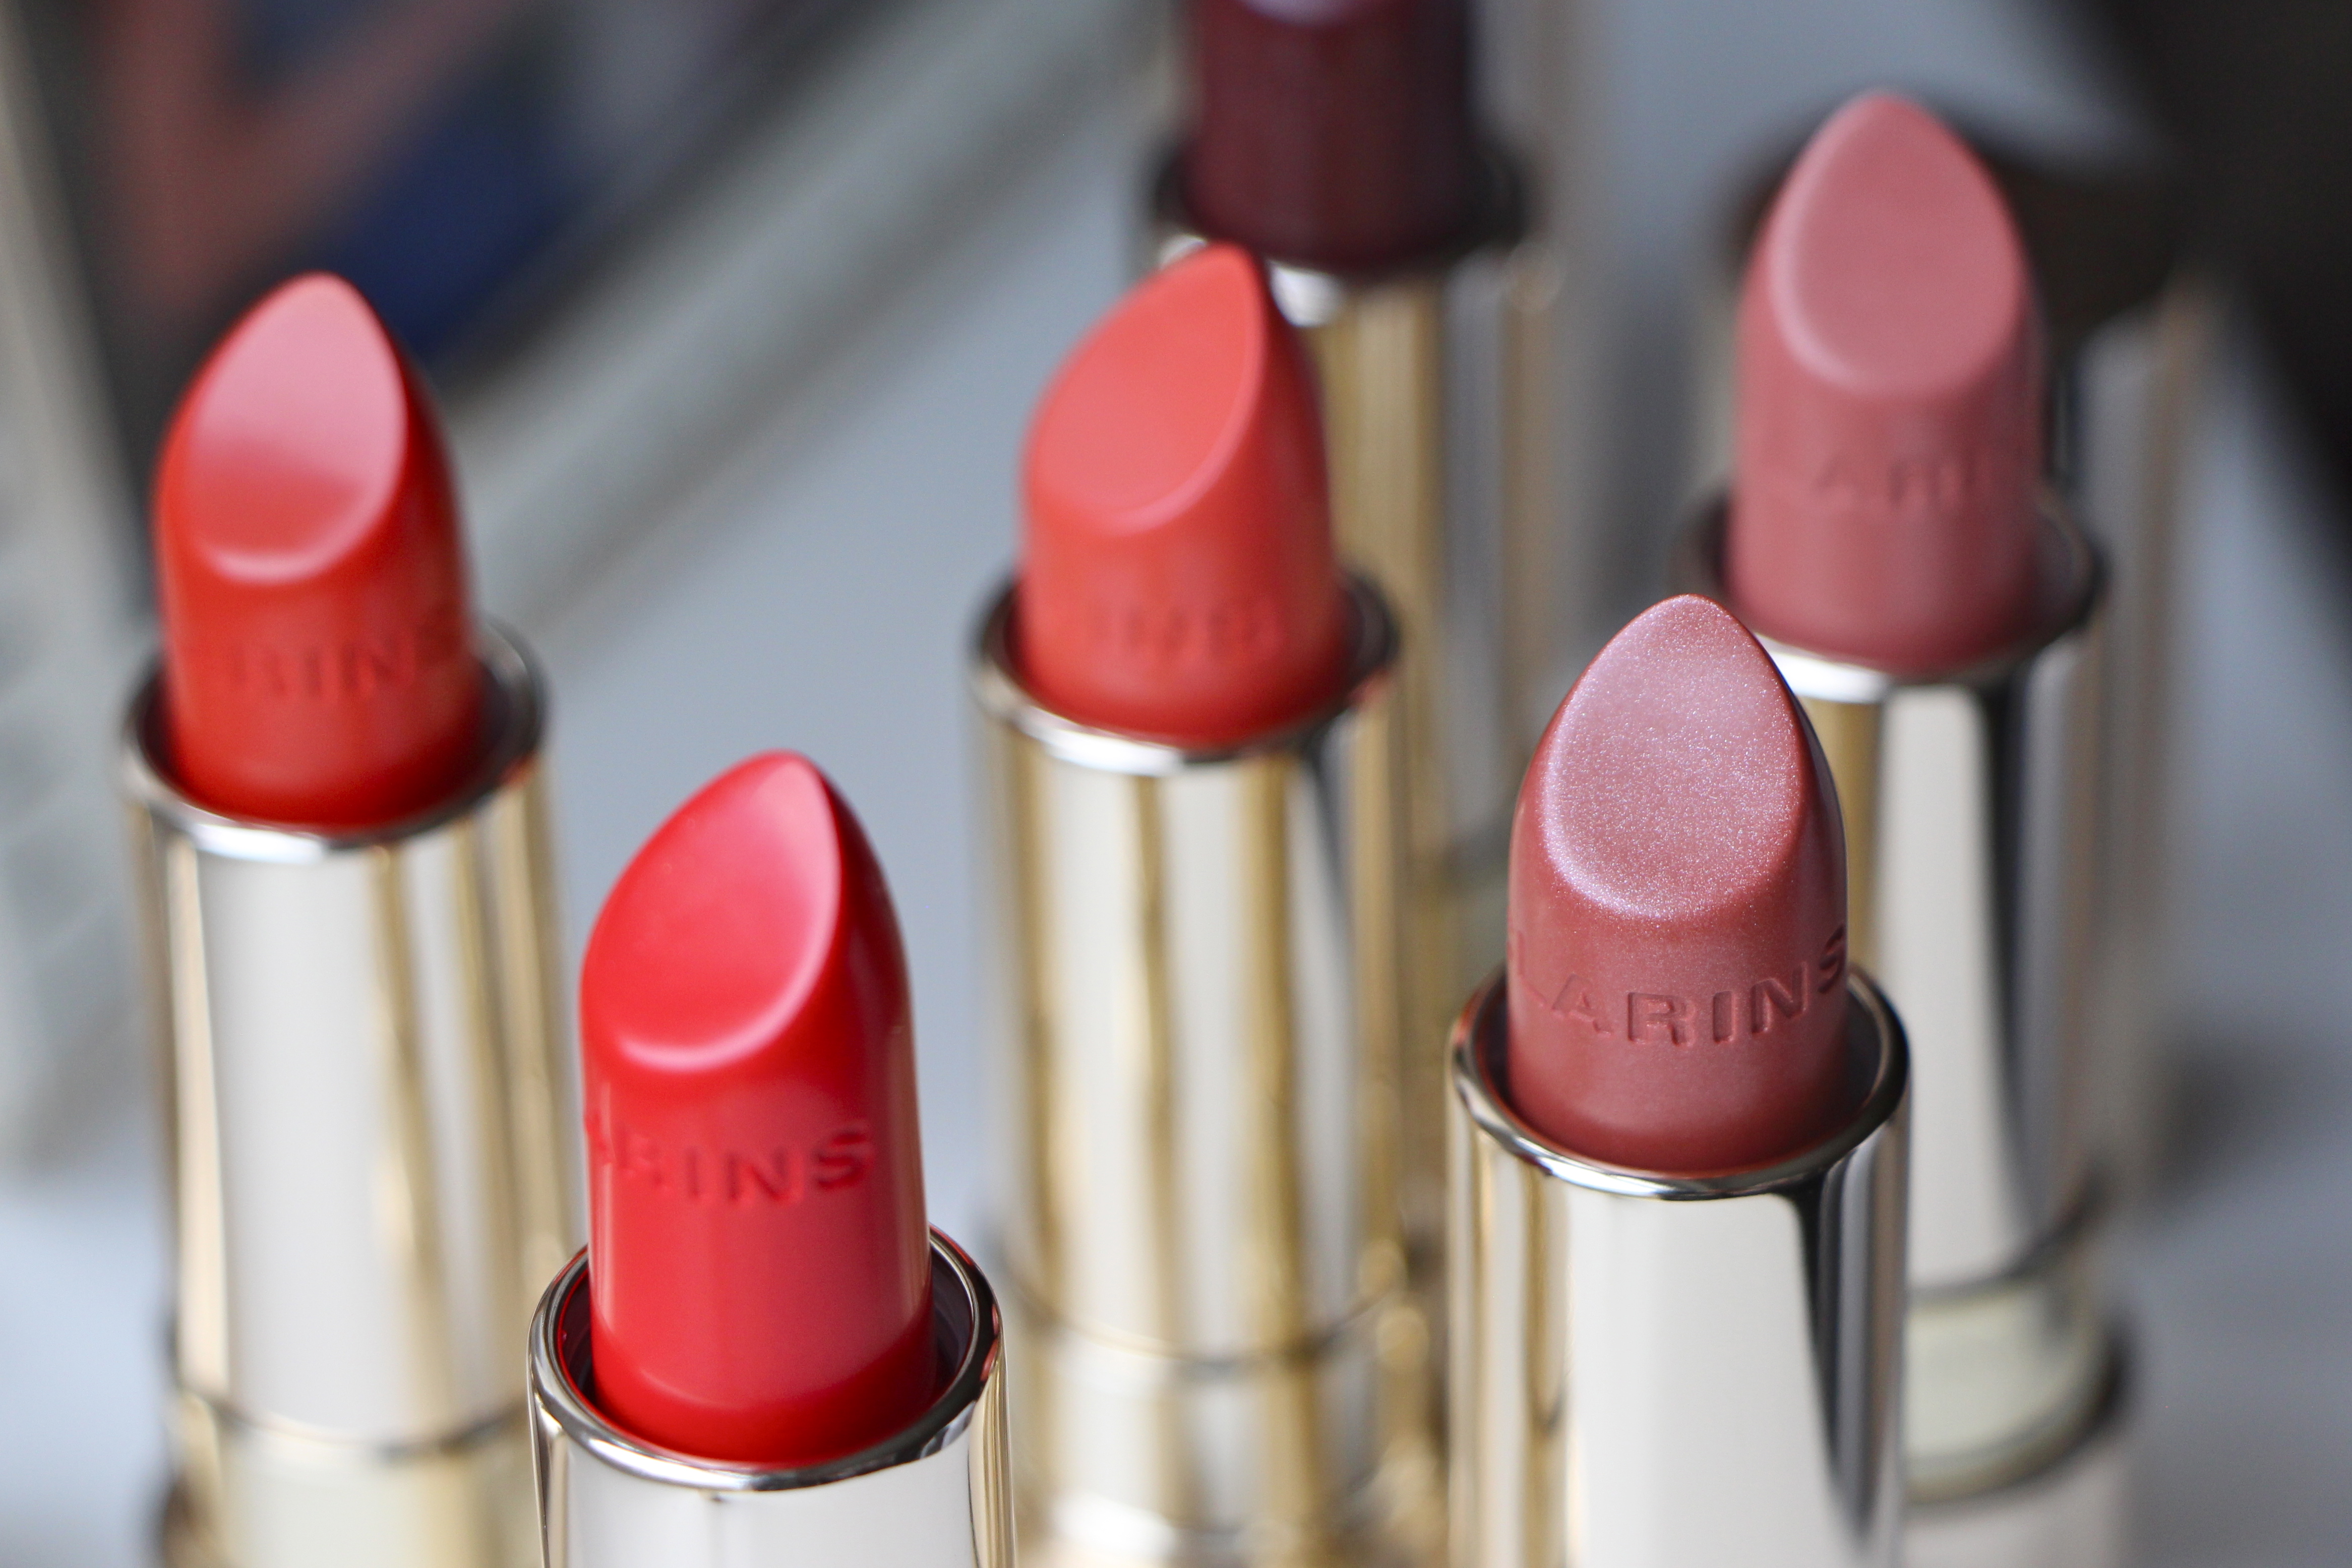 clarins joli rouge lipsticks